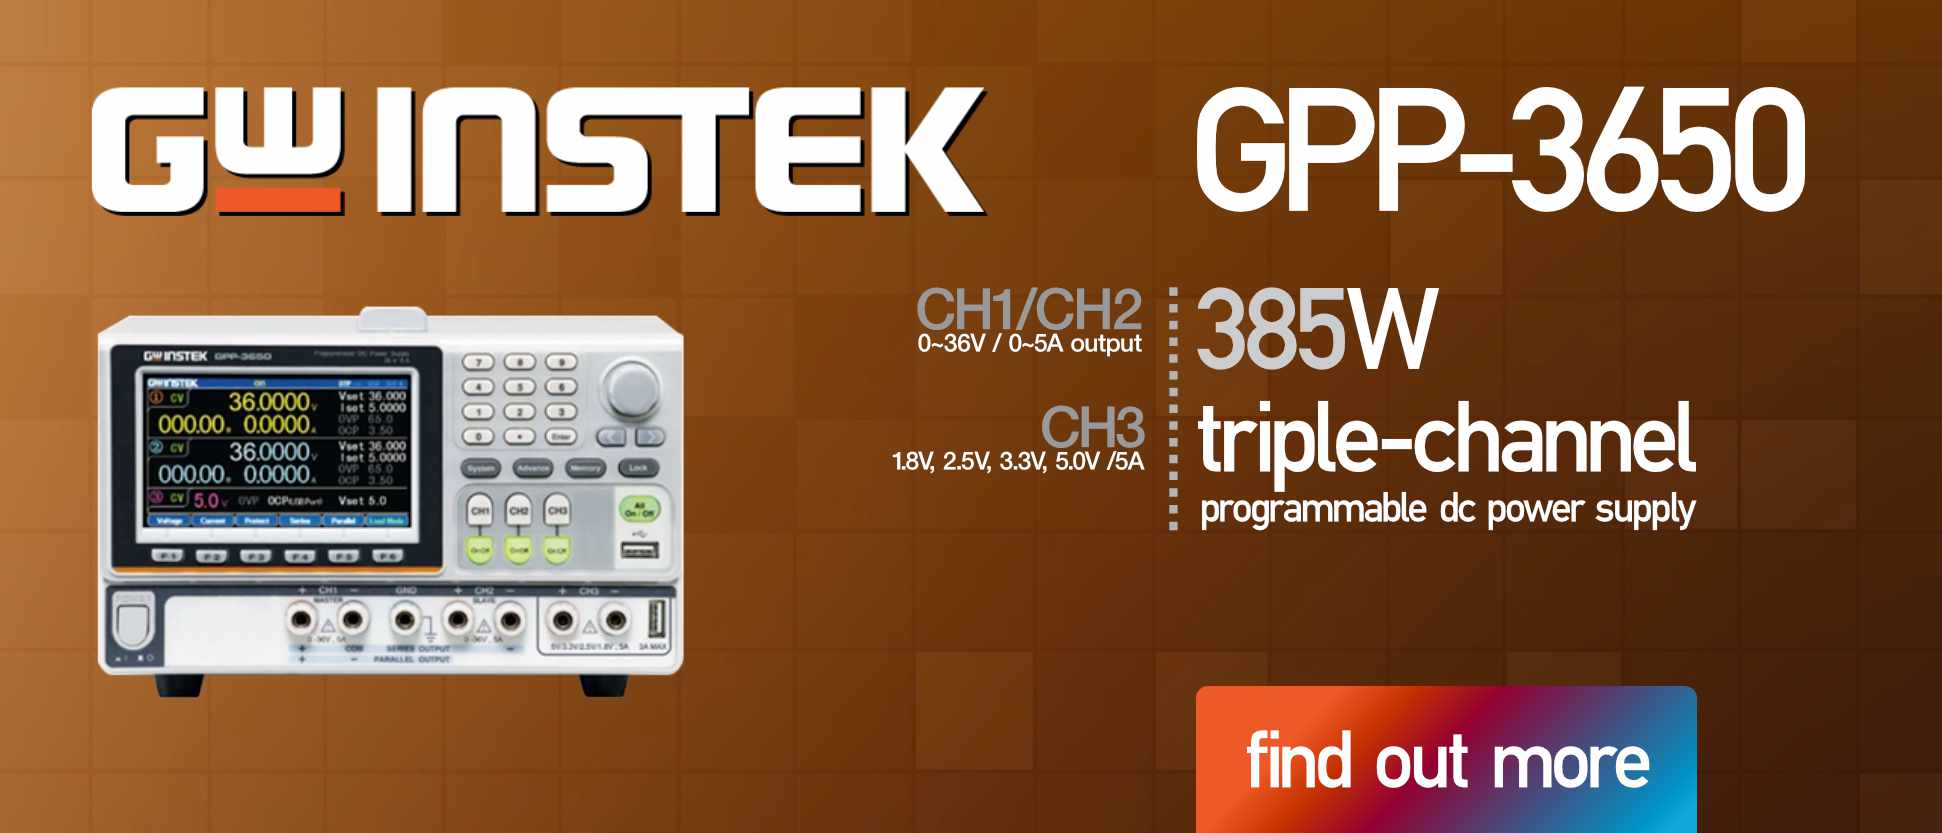 Introduction-GPP-3650 385W Triple Channel Programmable DC Power Supply